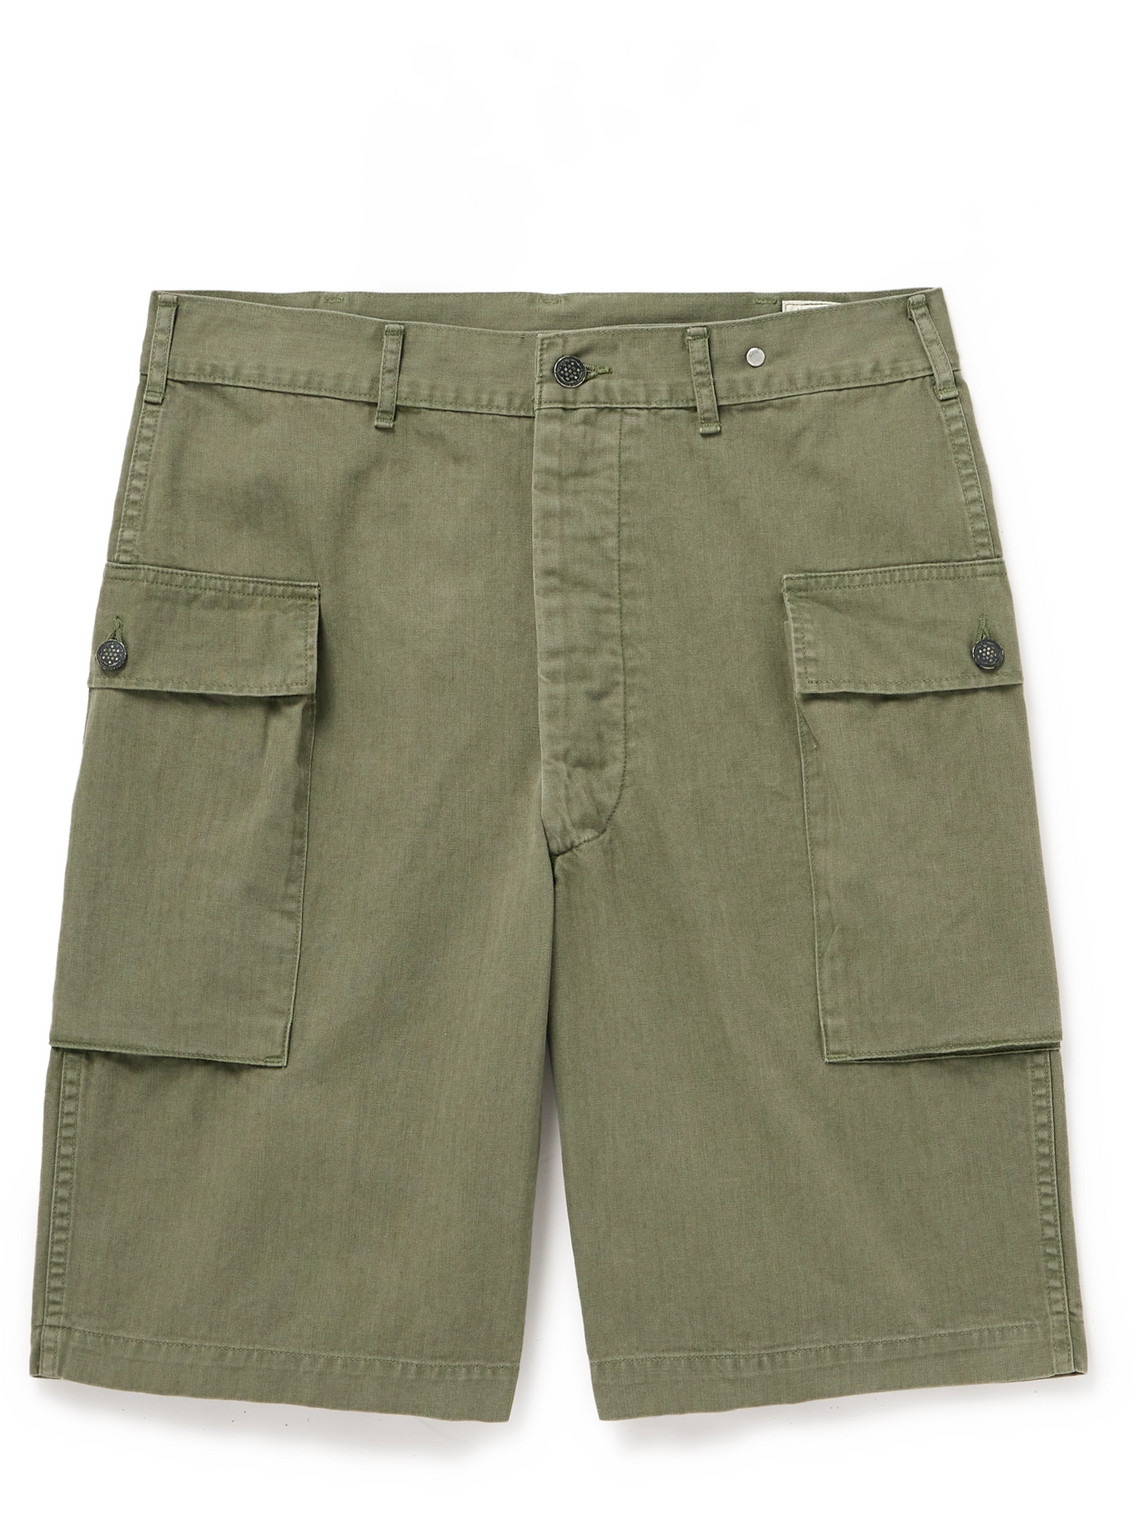 US Army Cotton-Herringbone Shorts